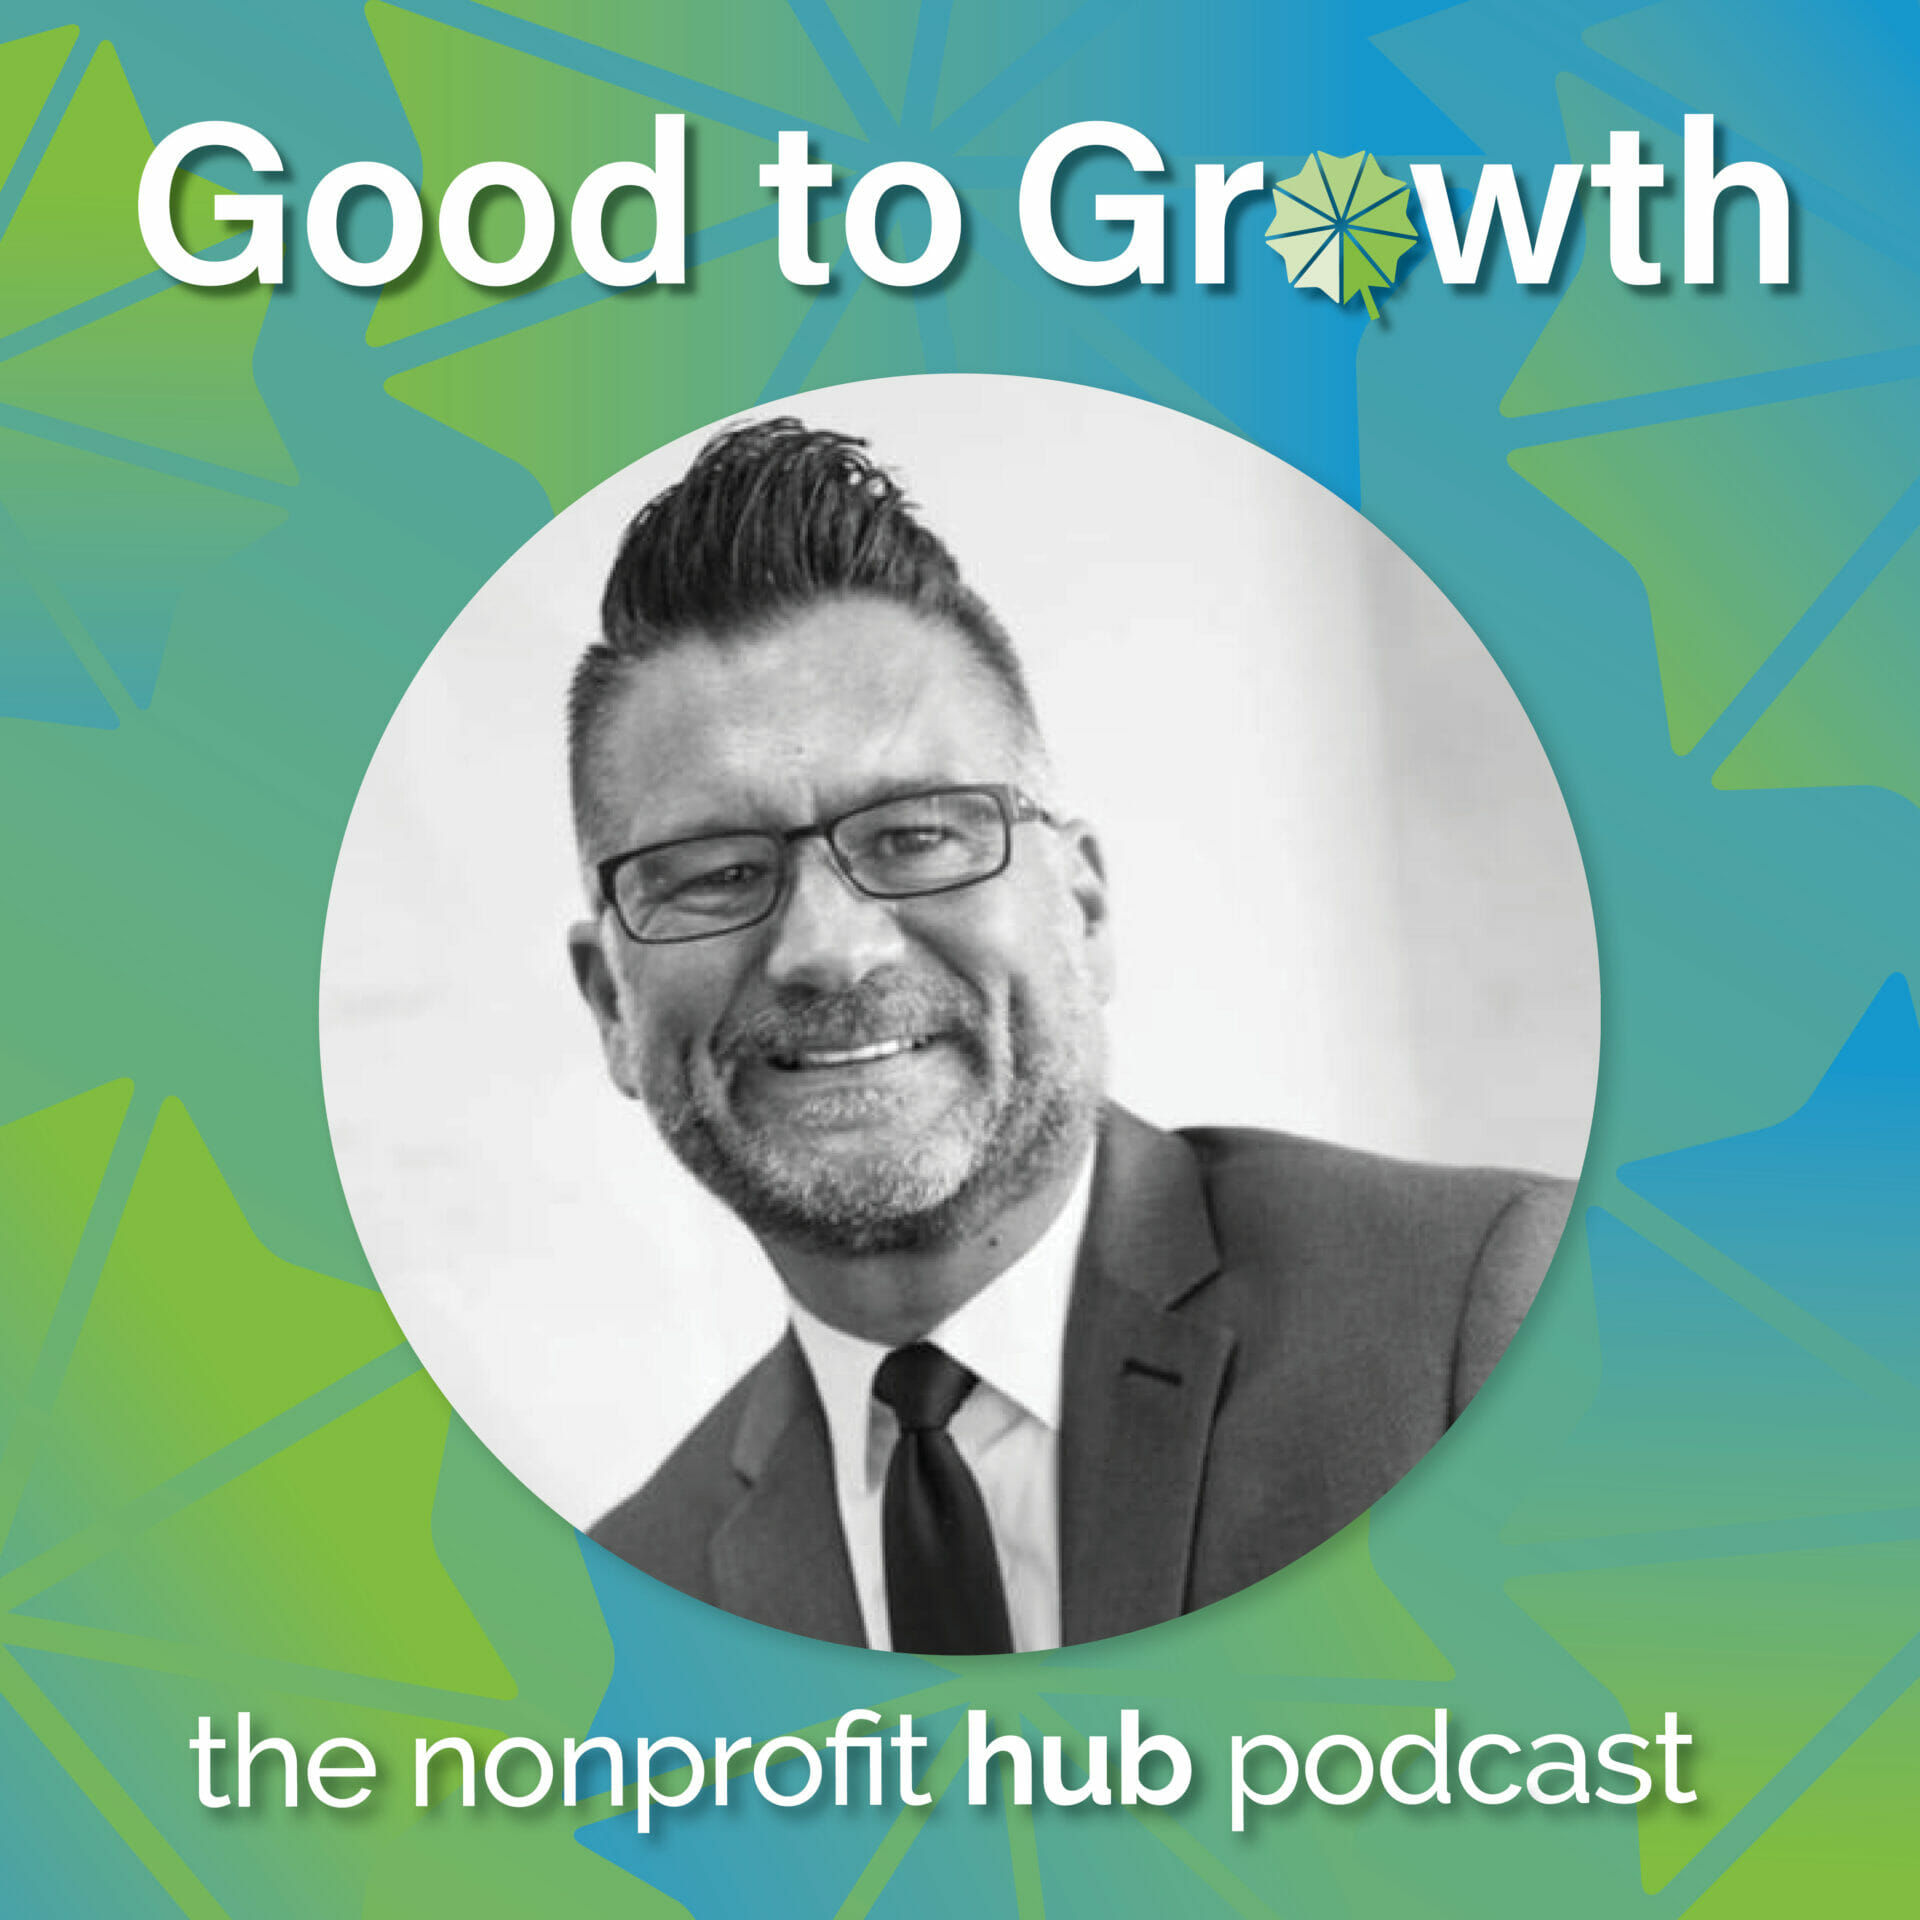 Tony Beall Good to Growth Podcast Image - Nonprofit Professional Development